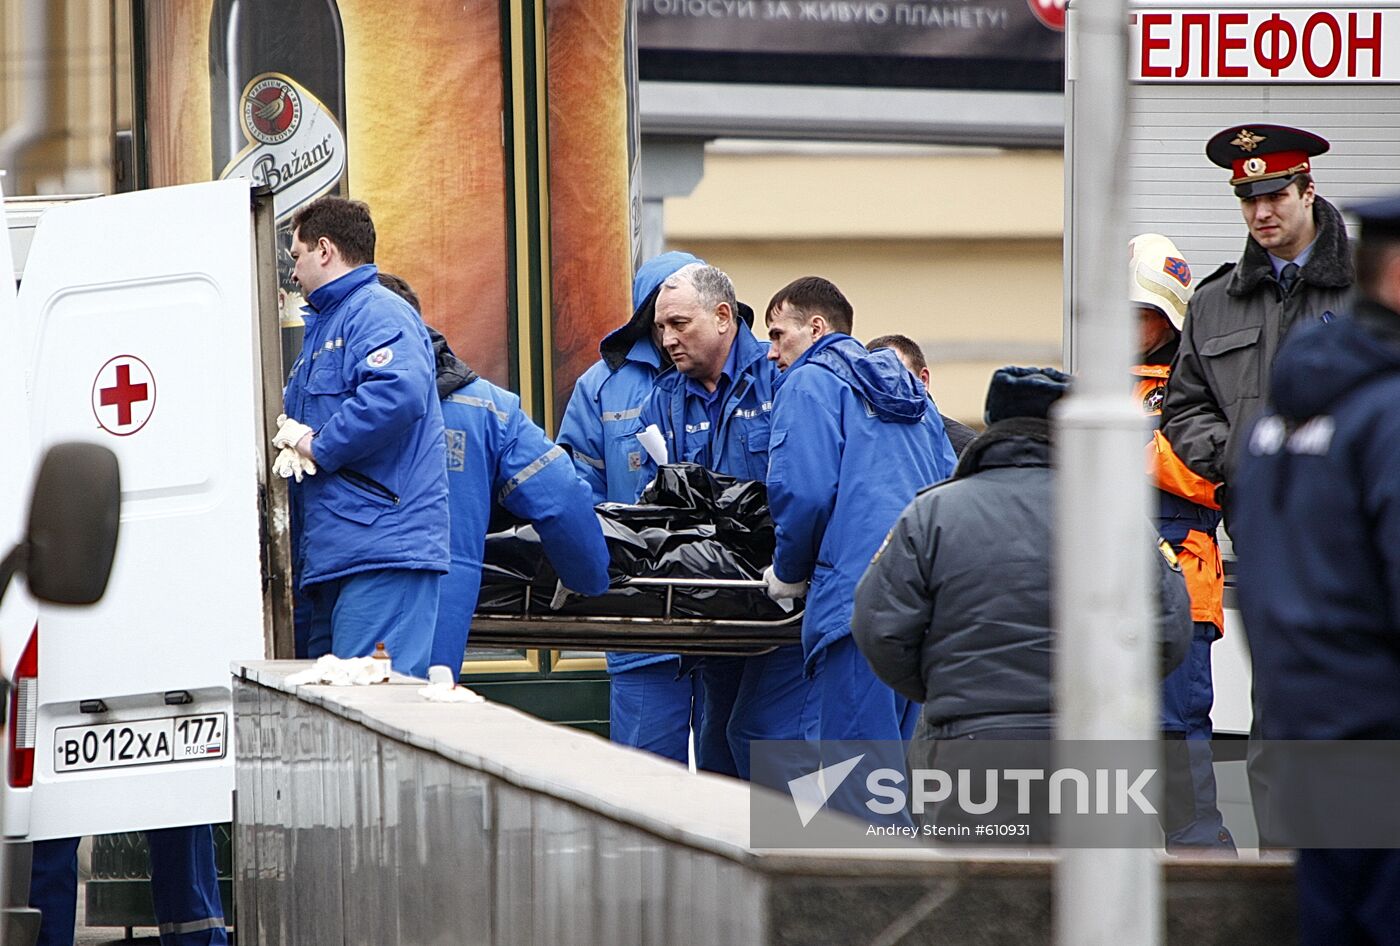 Explosion at Lubyanka metro station